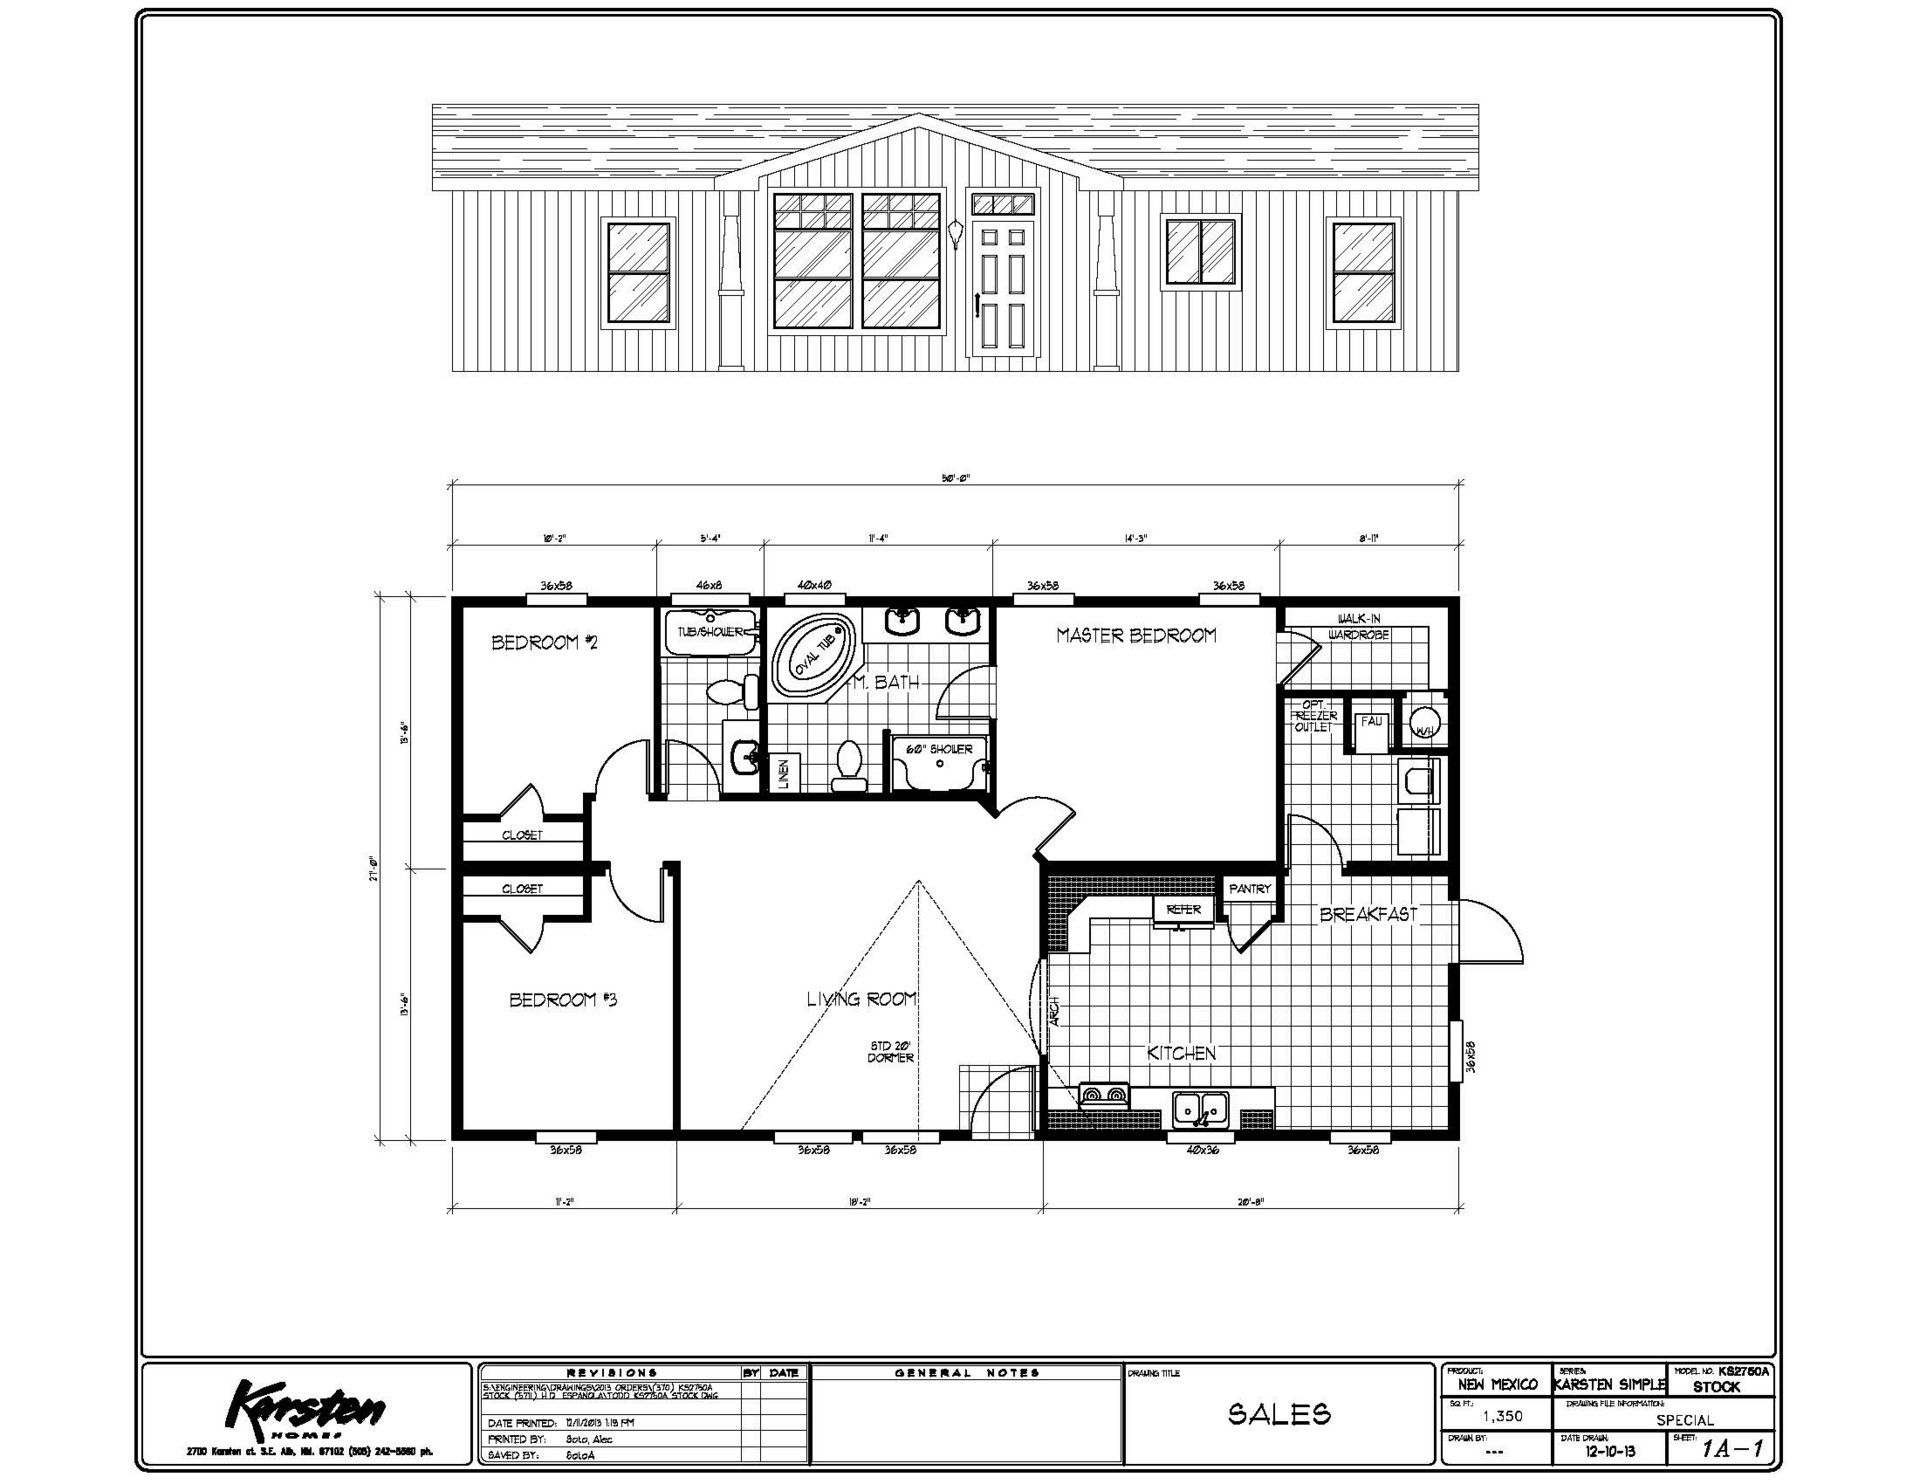 Homes Direct Modular Homes - Model KS2750A - Floorplan